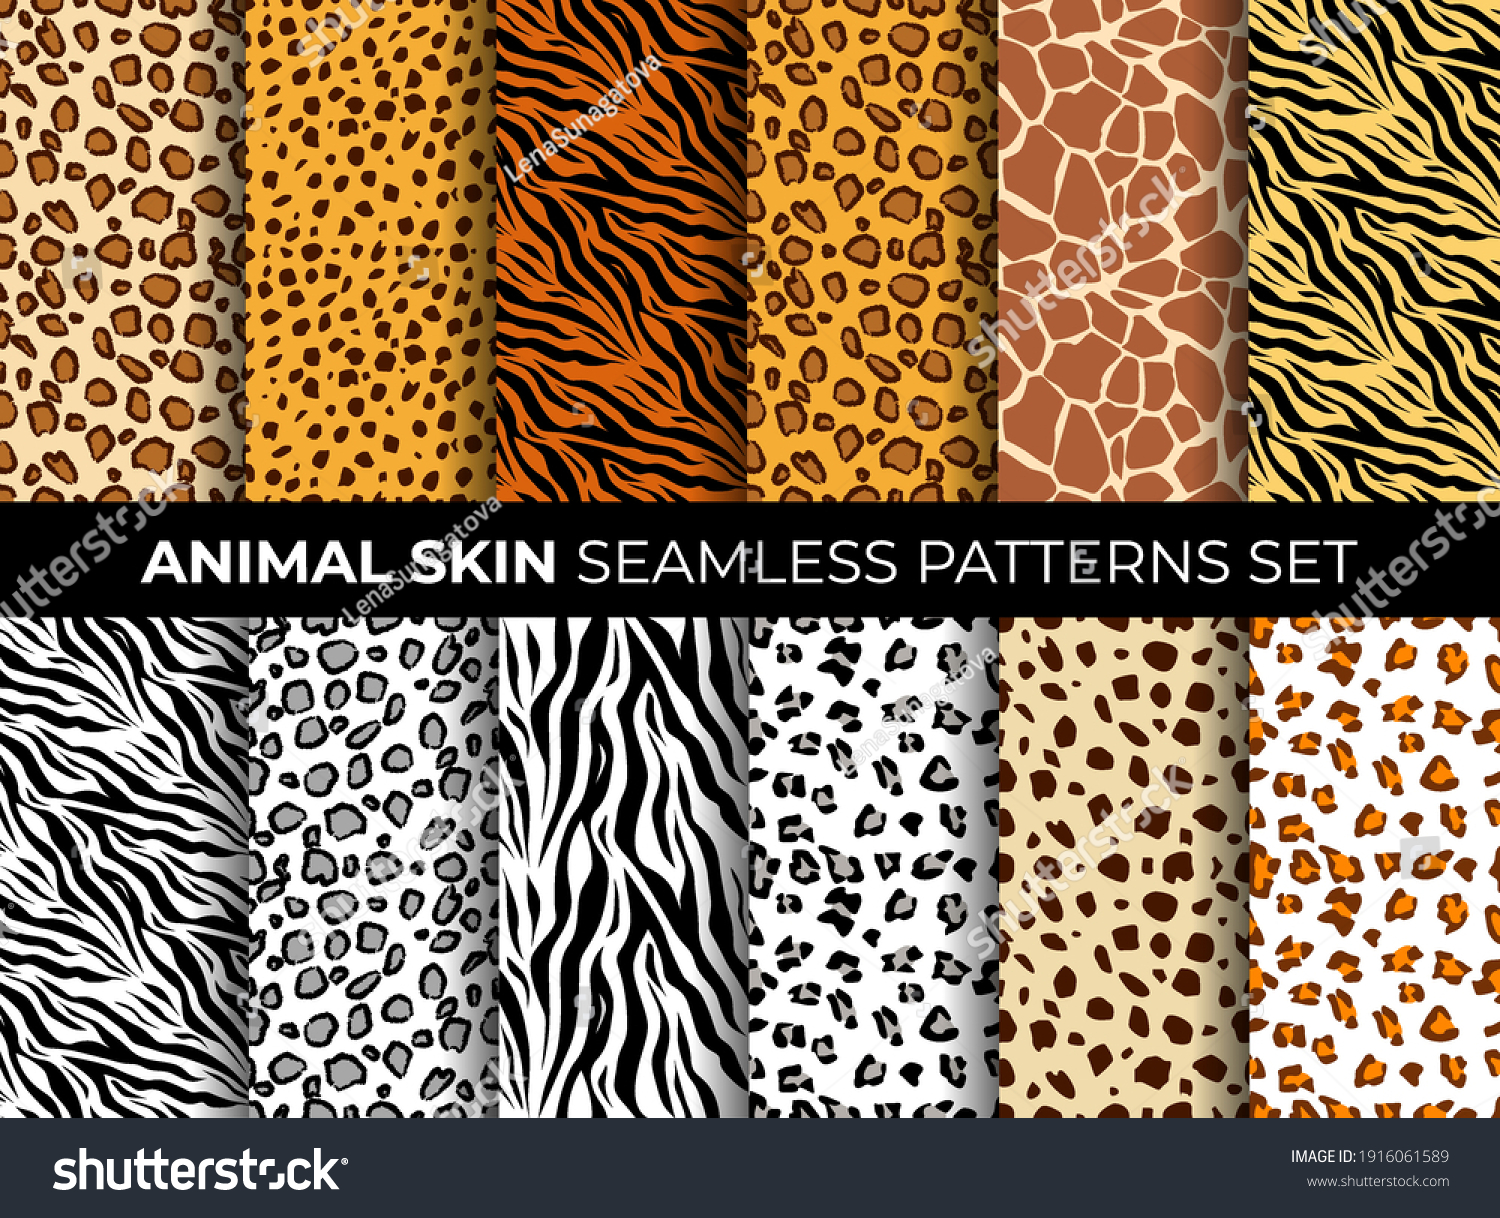 Animal skin seamless pattern set. Mammals Fur. Collection of print skins. Cheetah, Giraffe, Tiger, Zebra, Leopard, Jaguar. Printable Background. Vector illustration. #1916061589